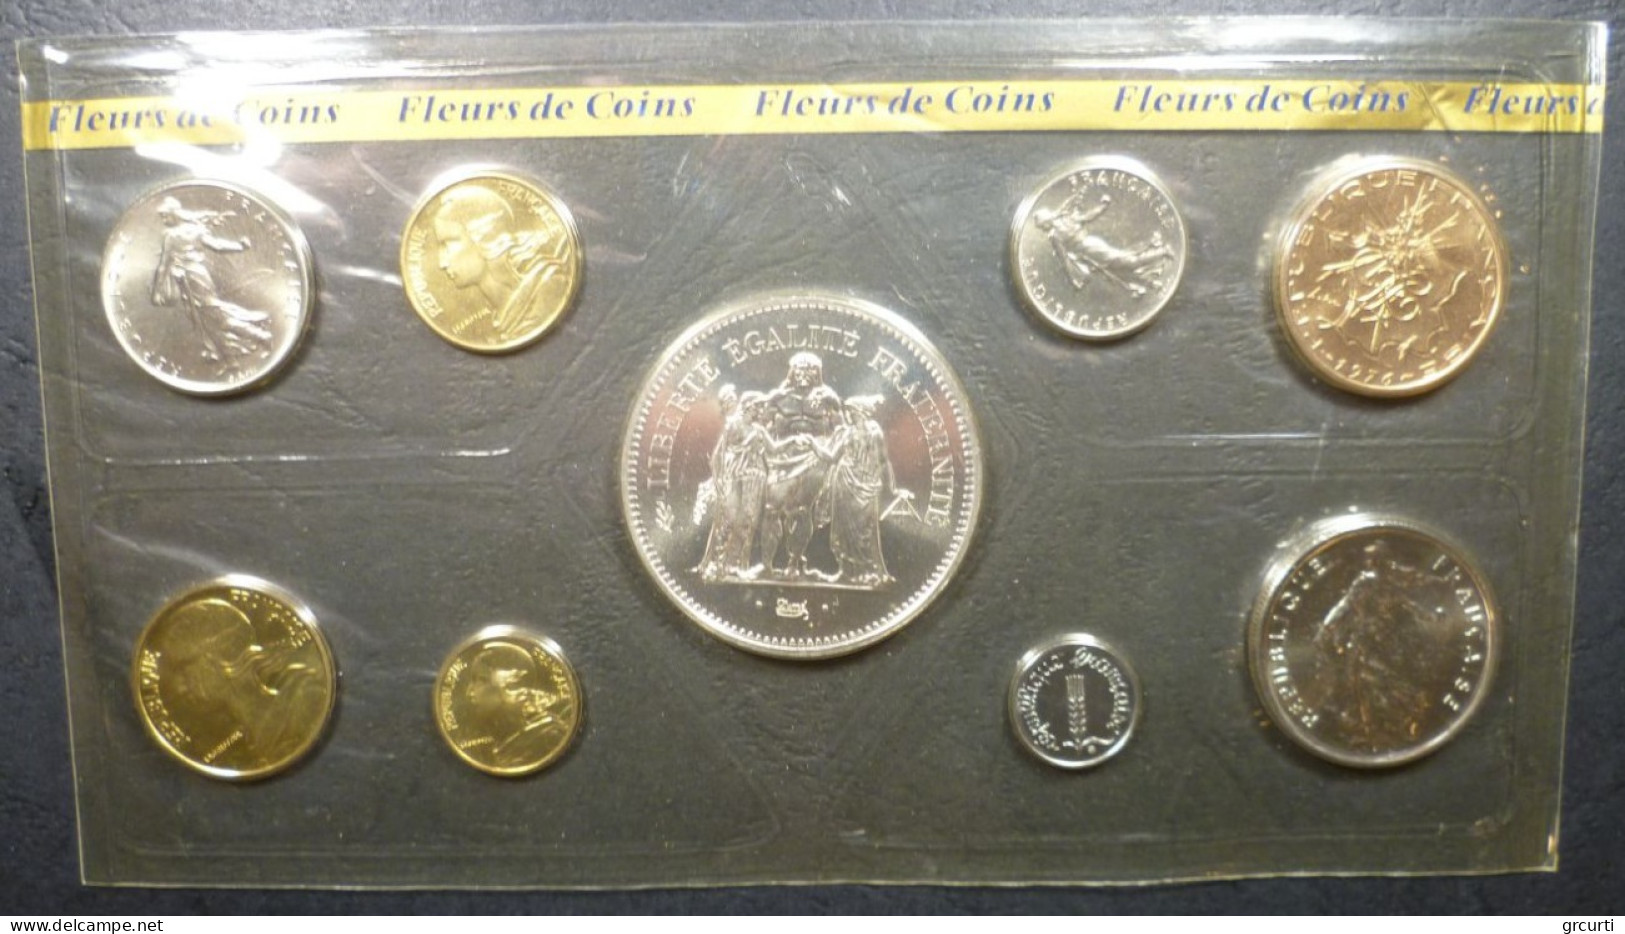 Francia - Set Fleurs De Coins 1976 - KM# SS13 - BU, Proofs & Presentation Cases